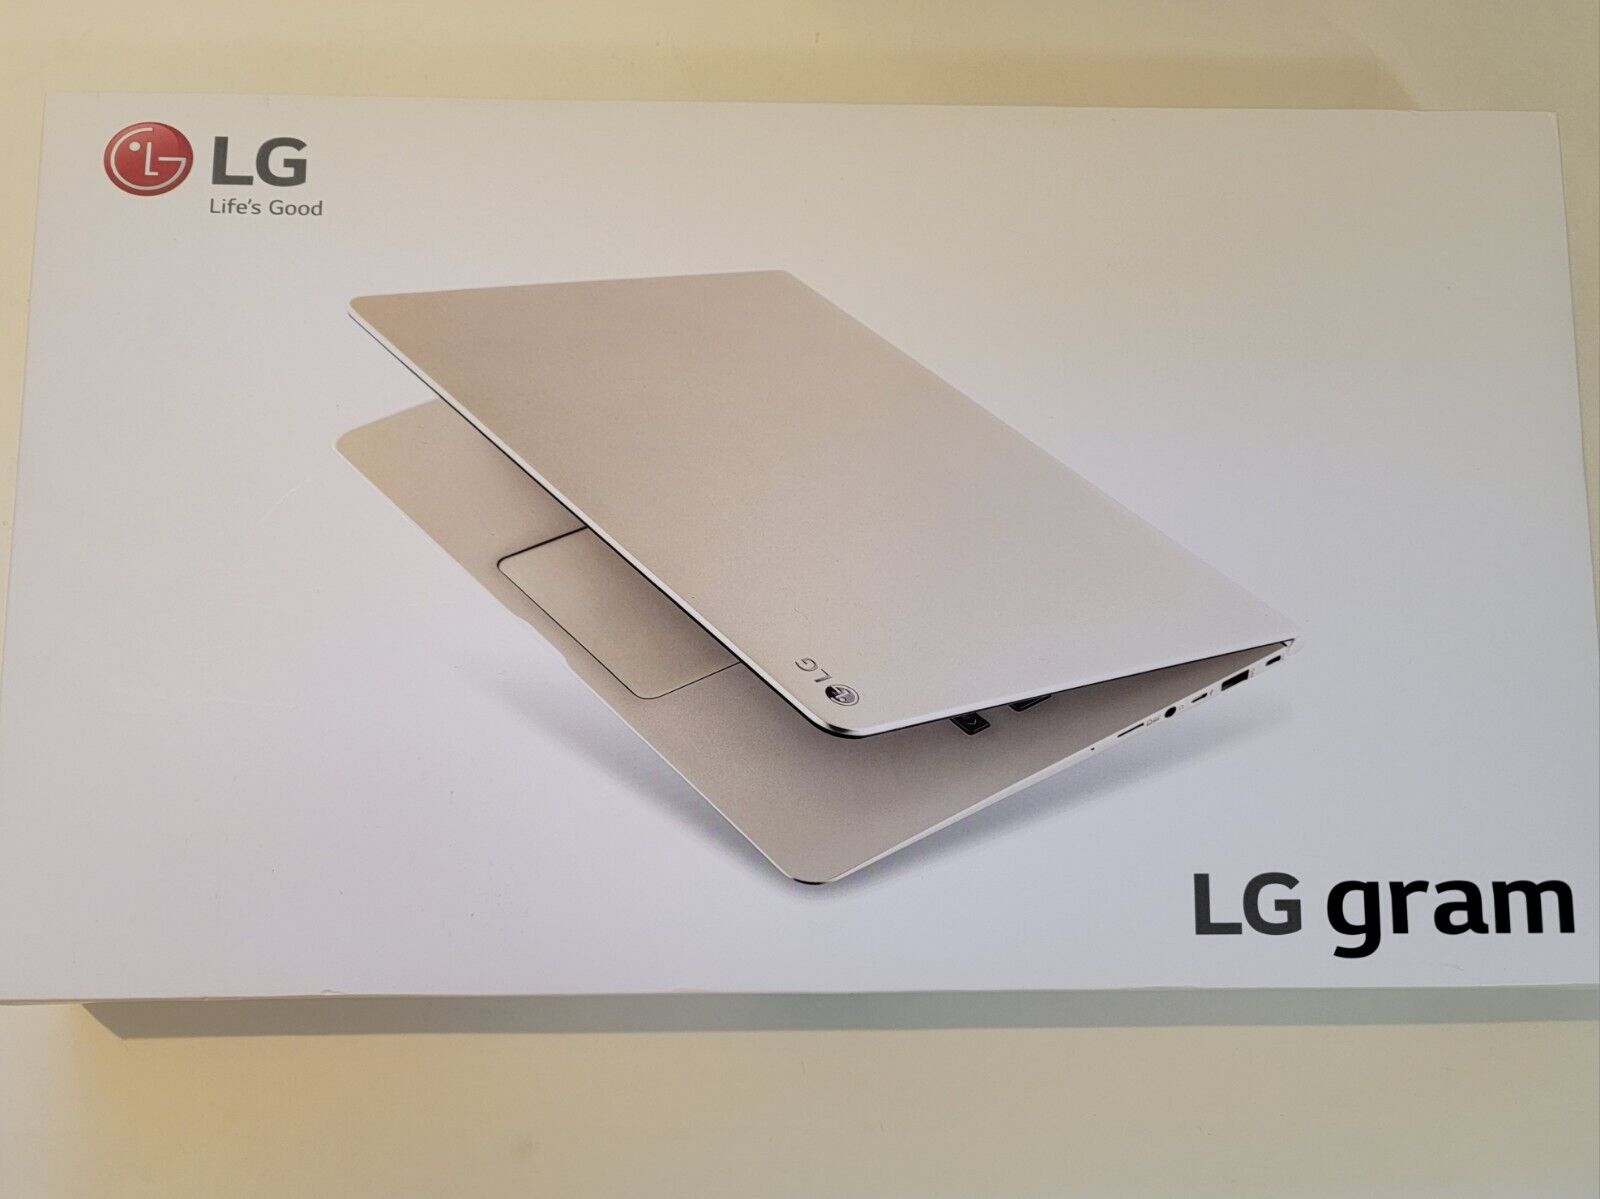 NEW IN BOX - LG Gram Laptop 14Z950 -A.AA3GU1